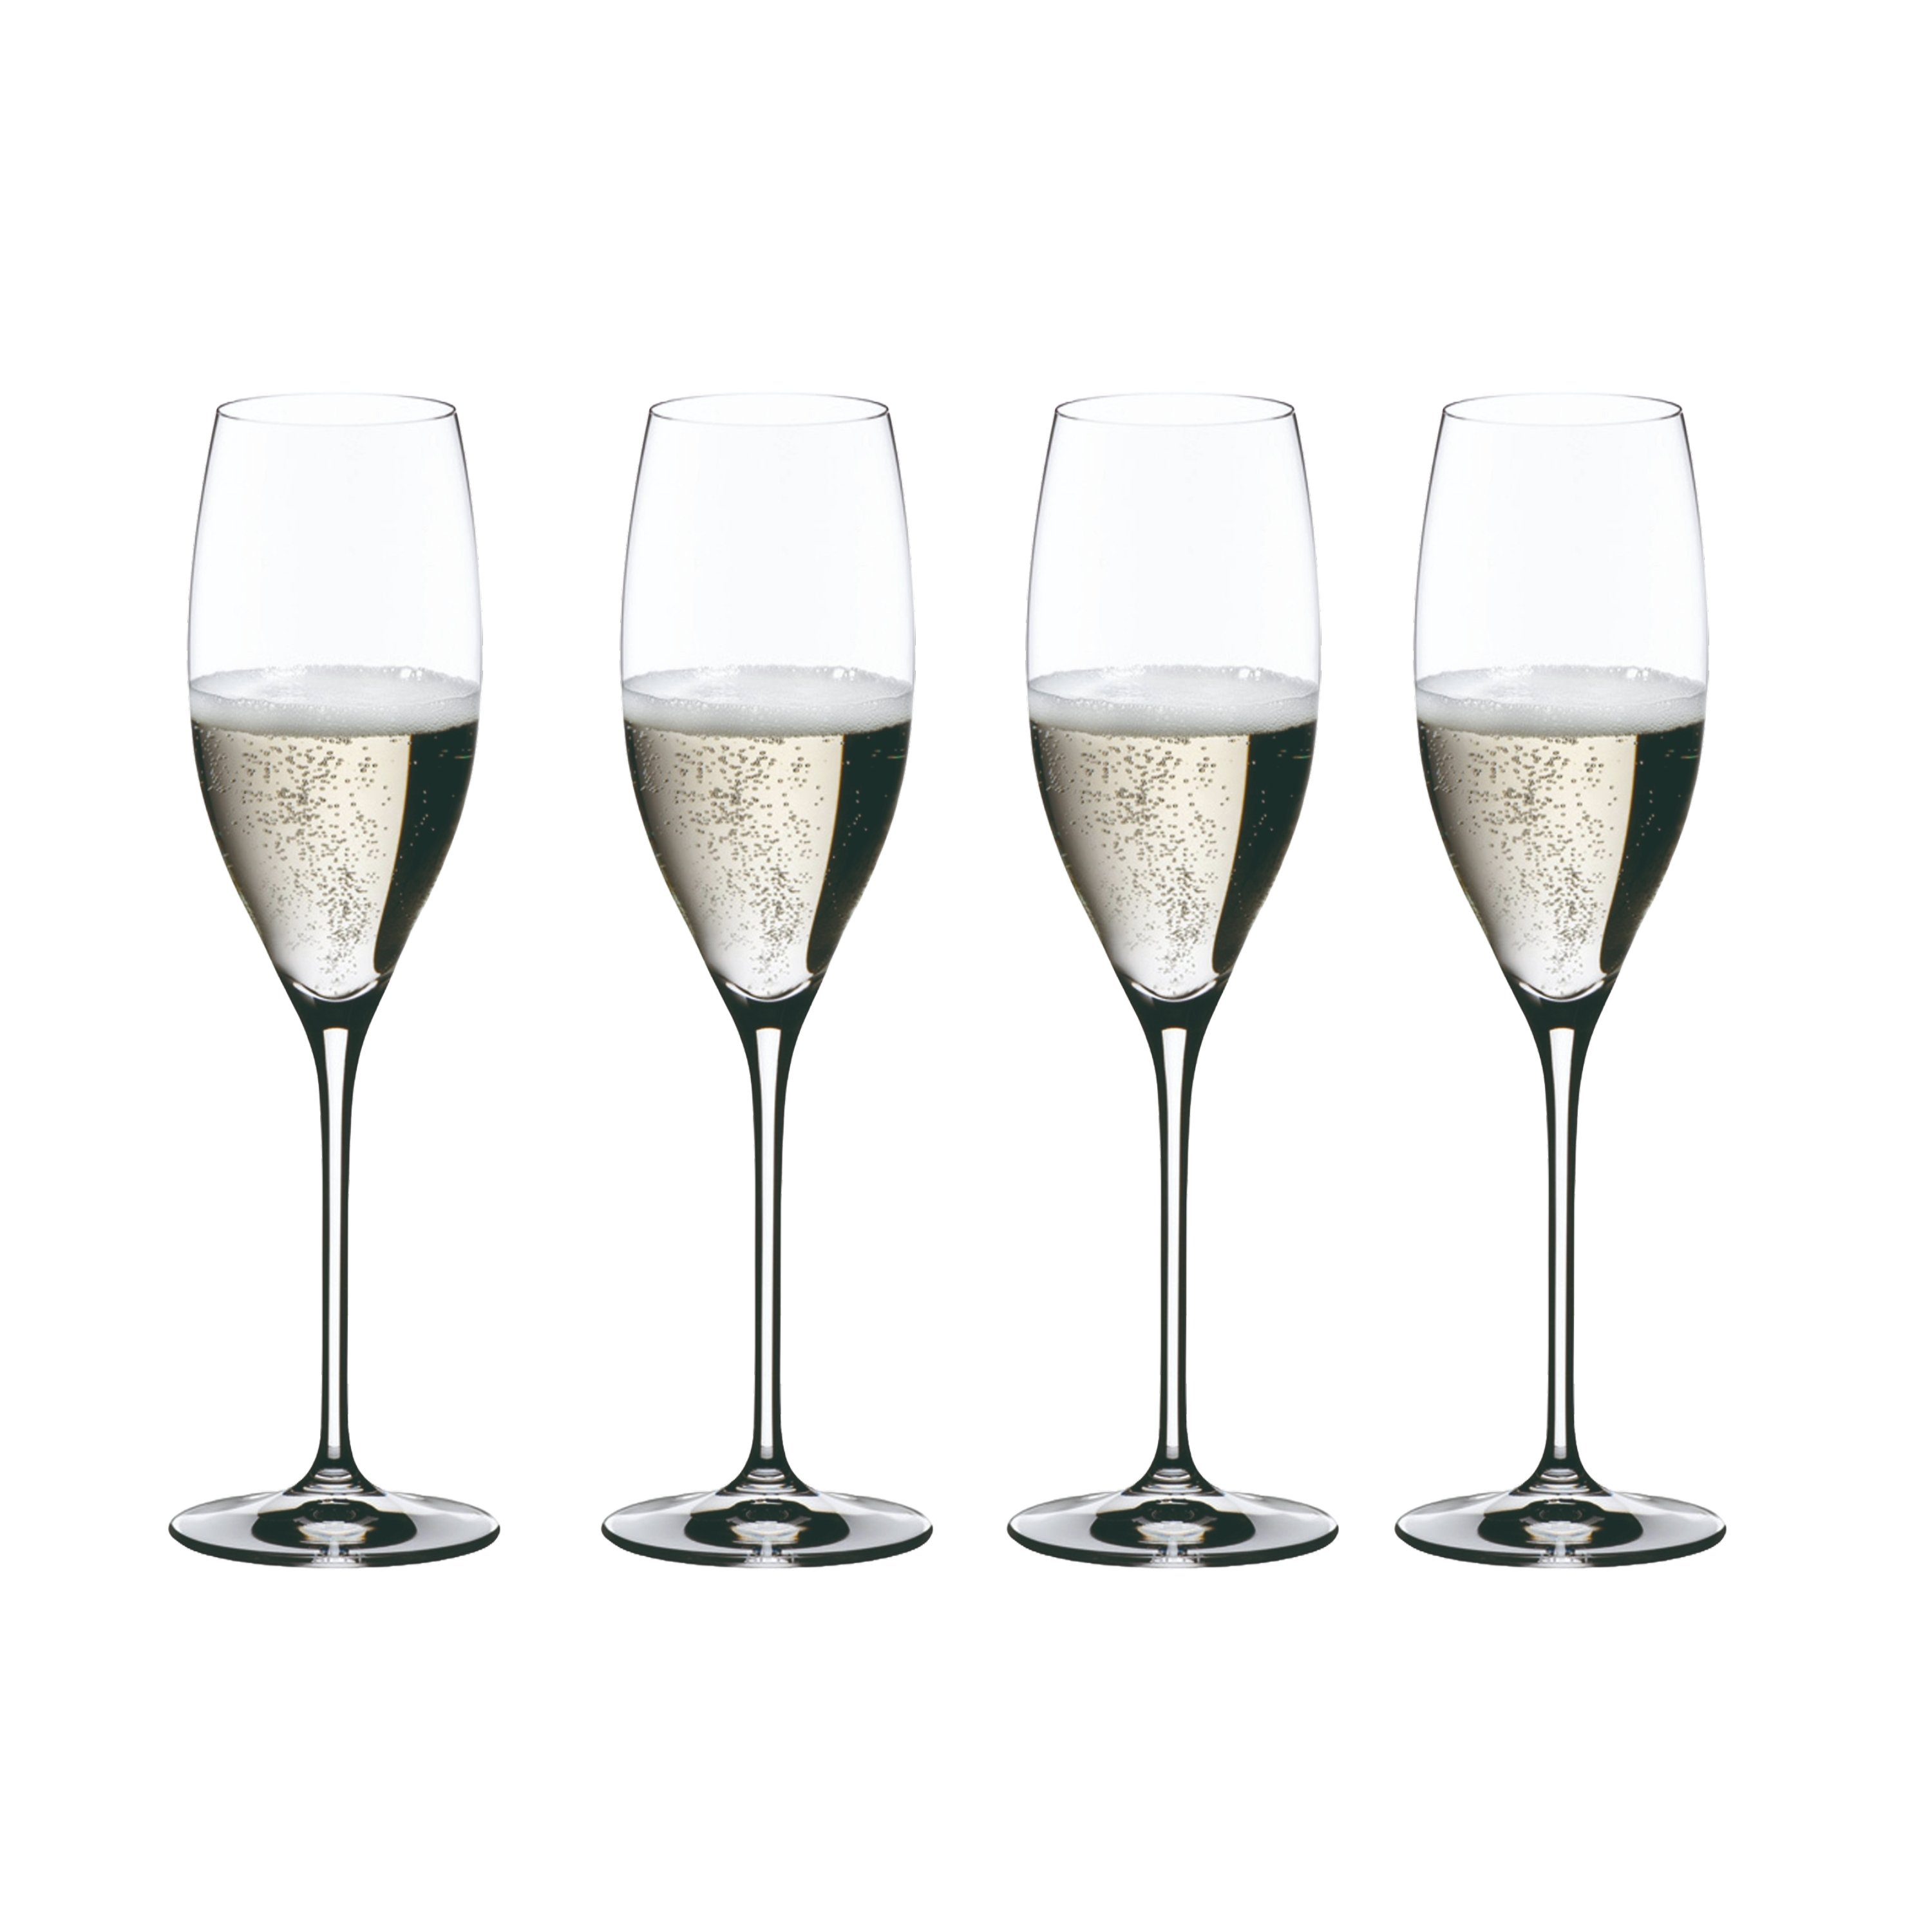 RIEDEL THE WINE GLASS COMPANY Champagnerglas Riedel Vinum Cuvée Prestige Set of 4, Glas